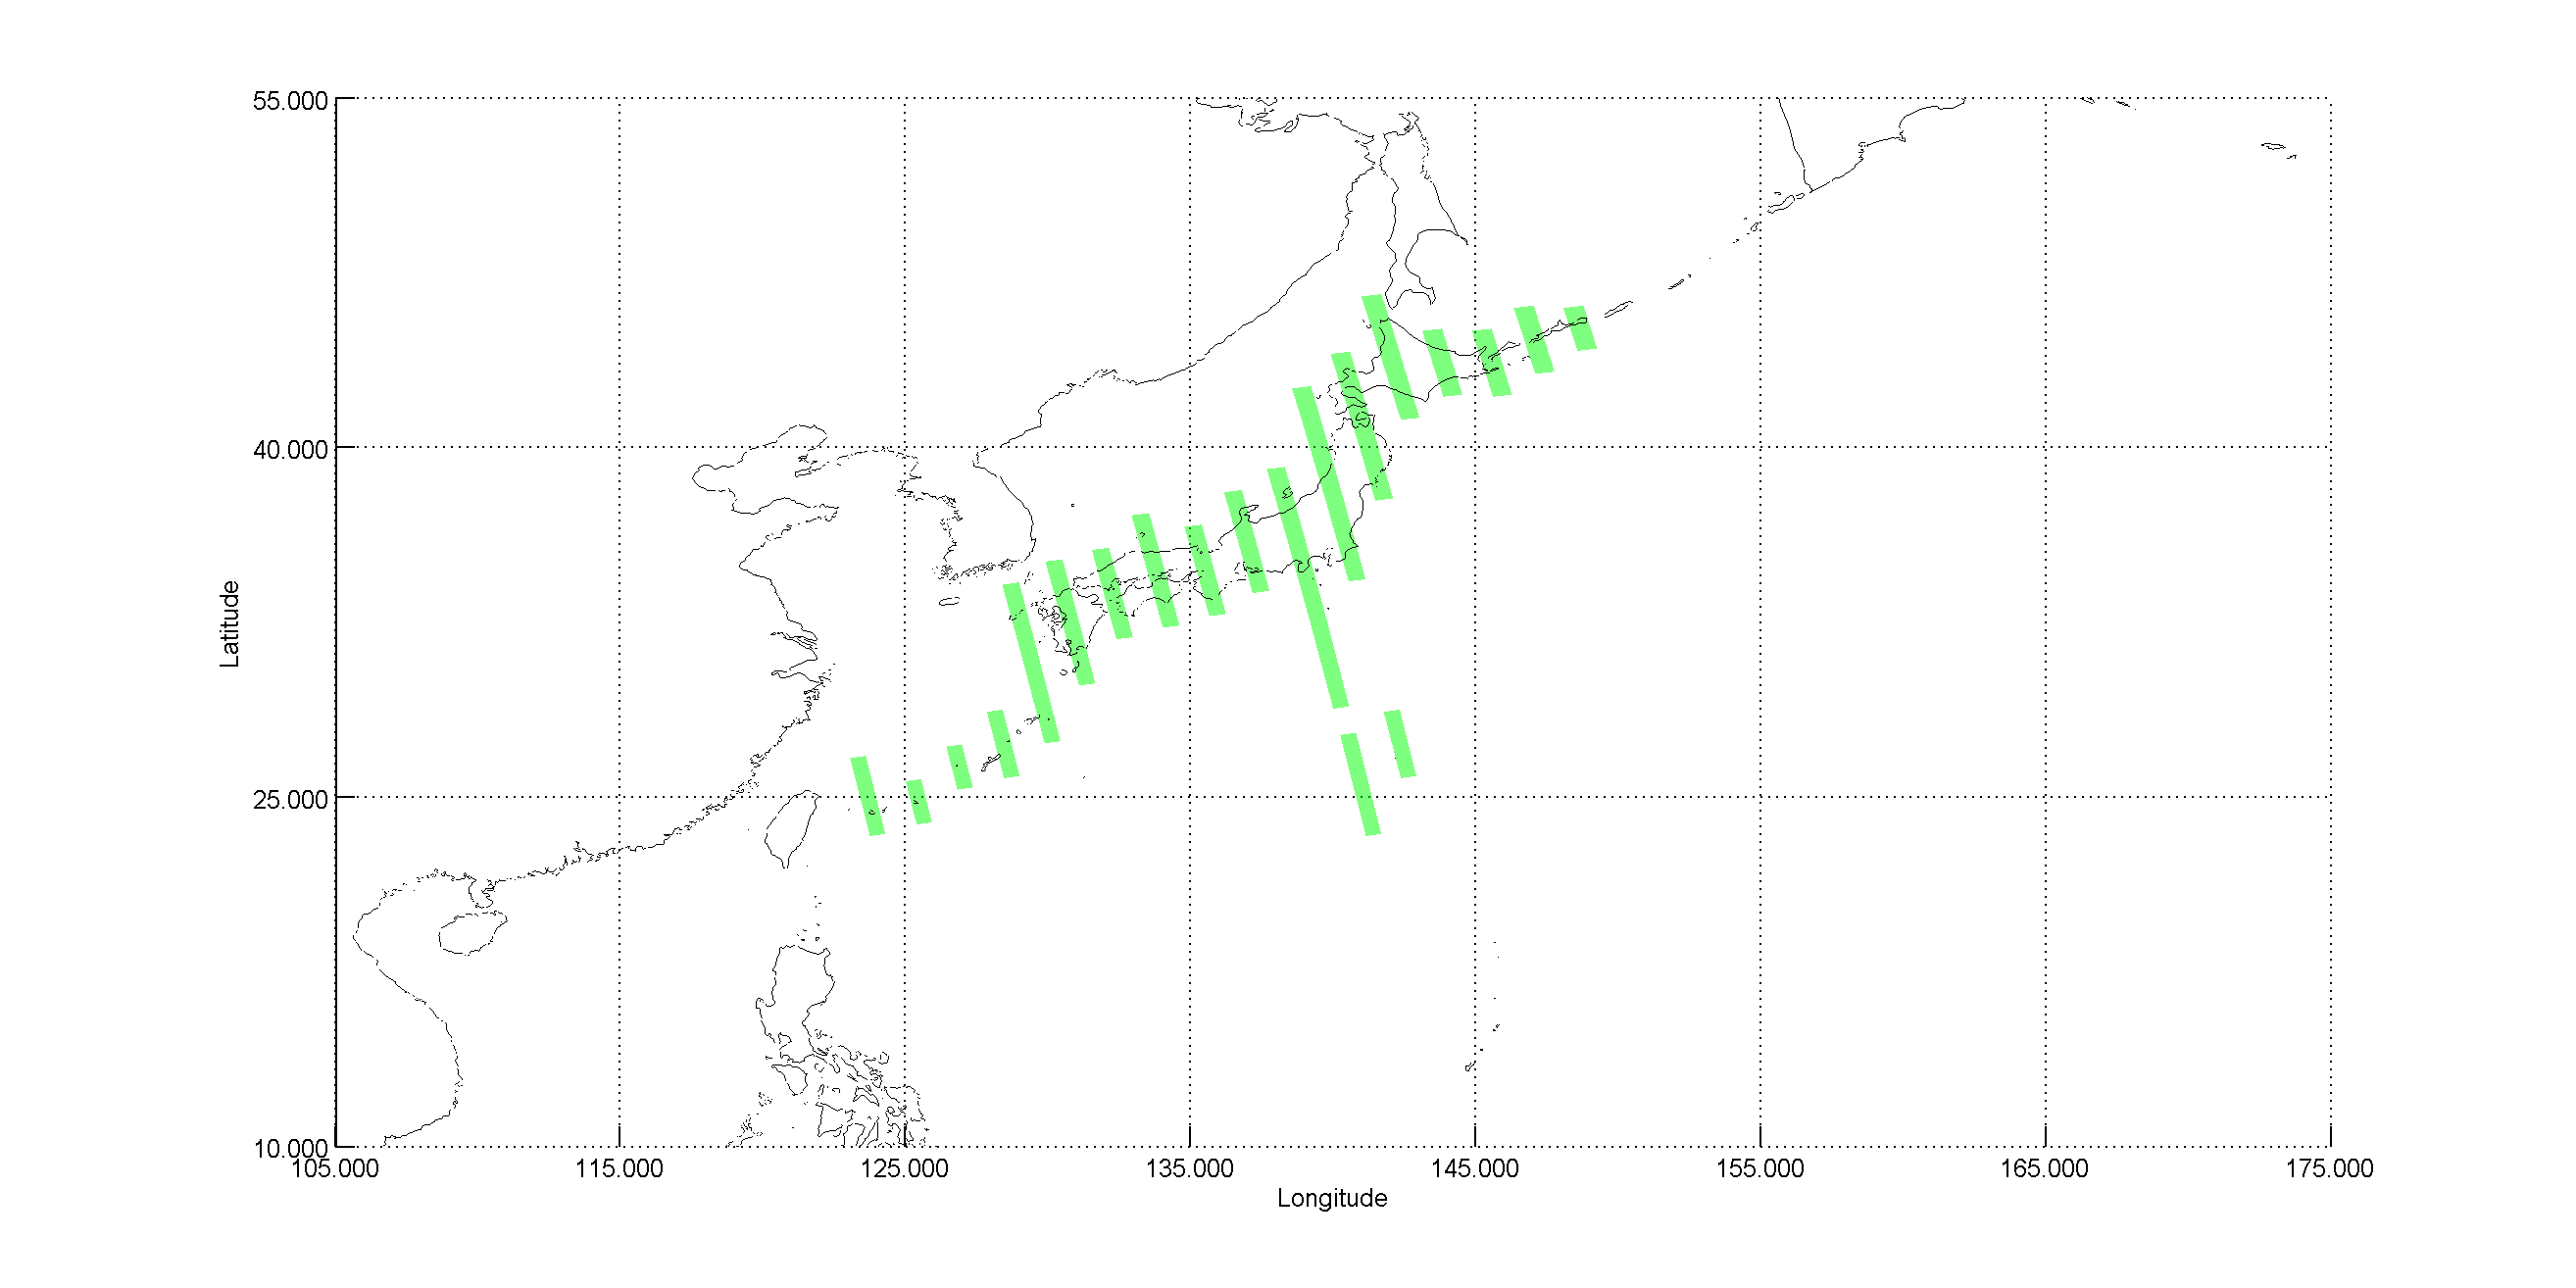 CYCLE_119 - Japan Ascending passes